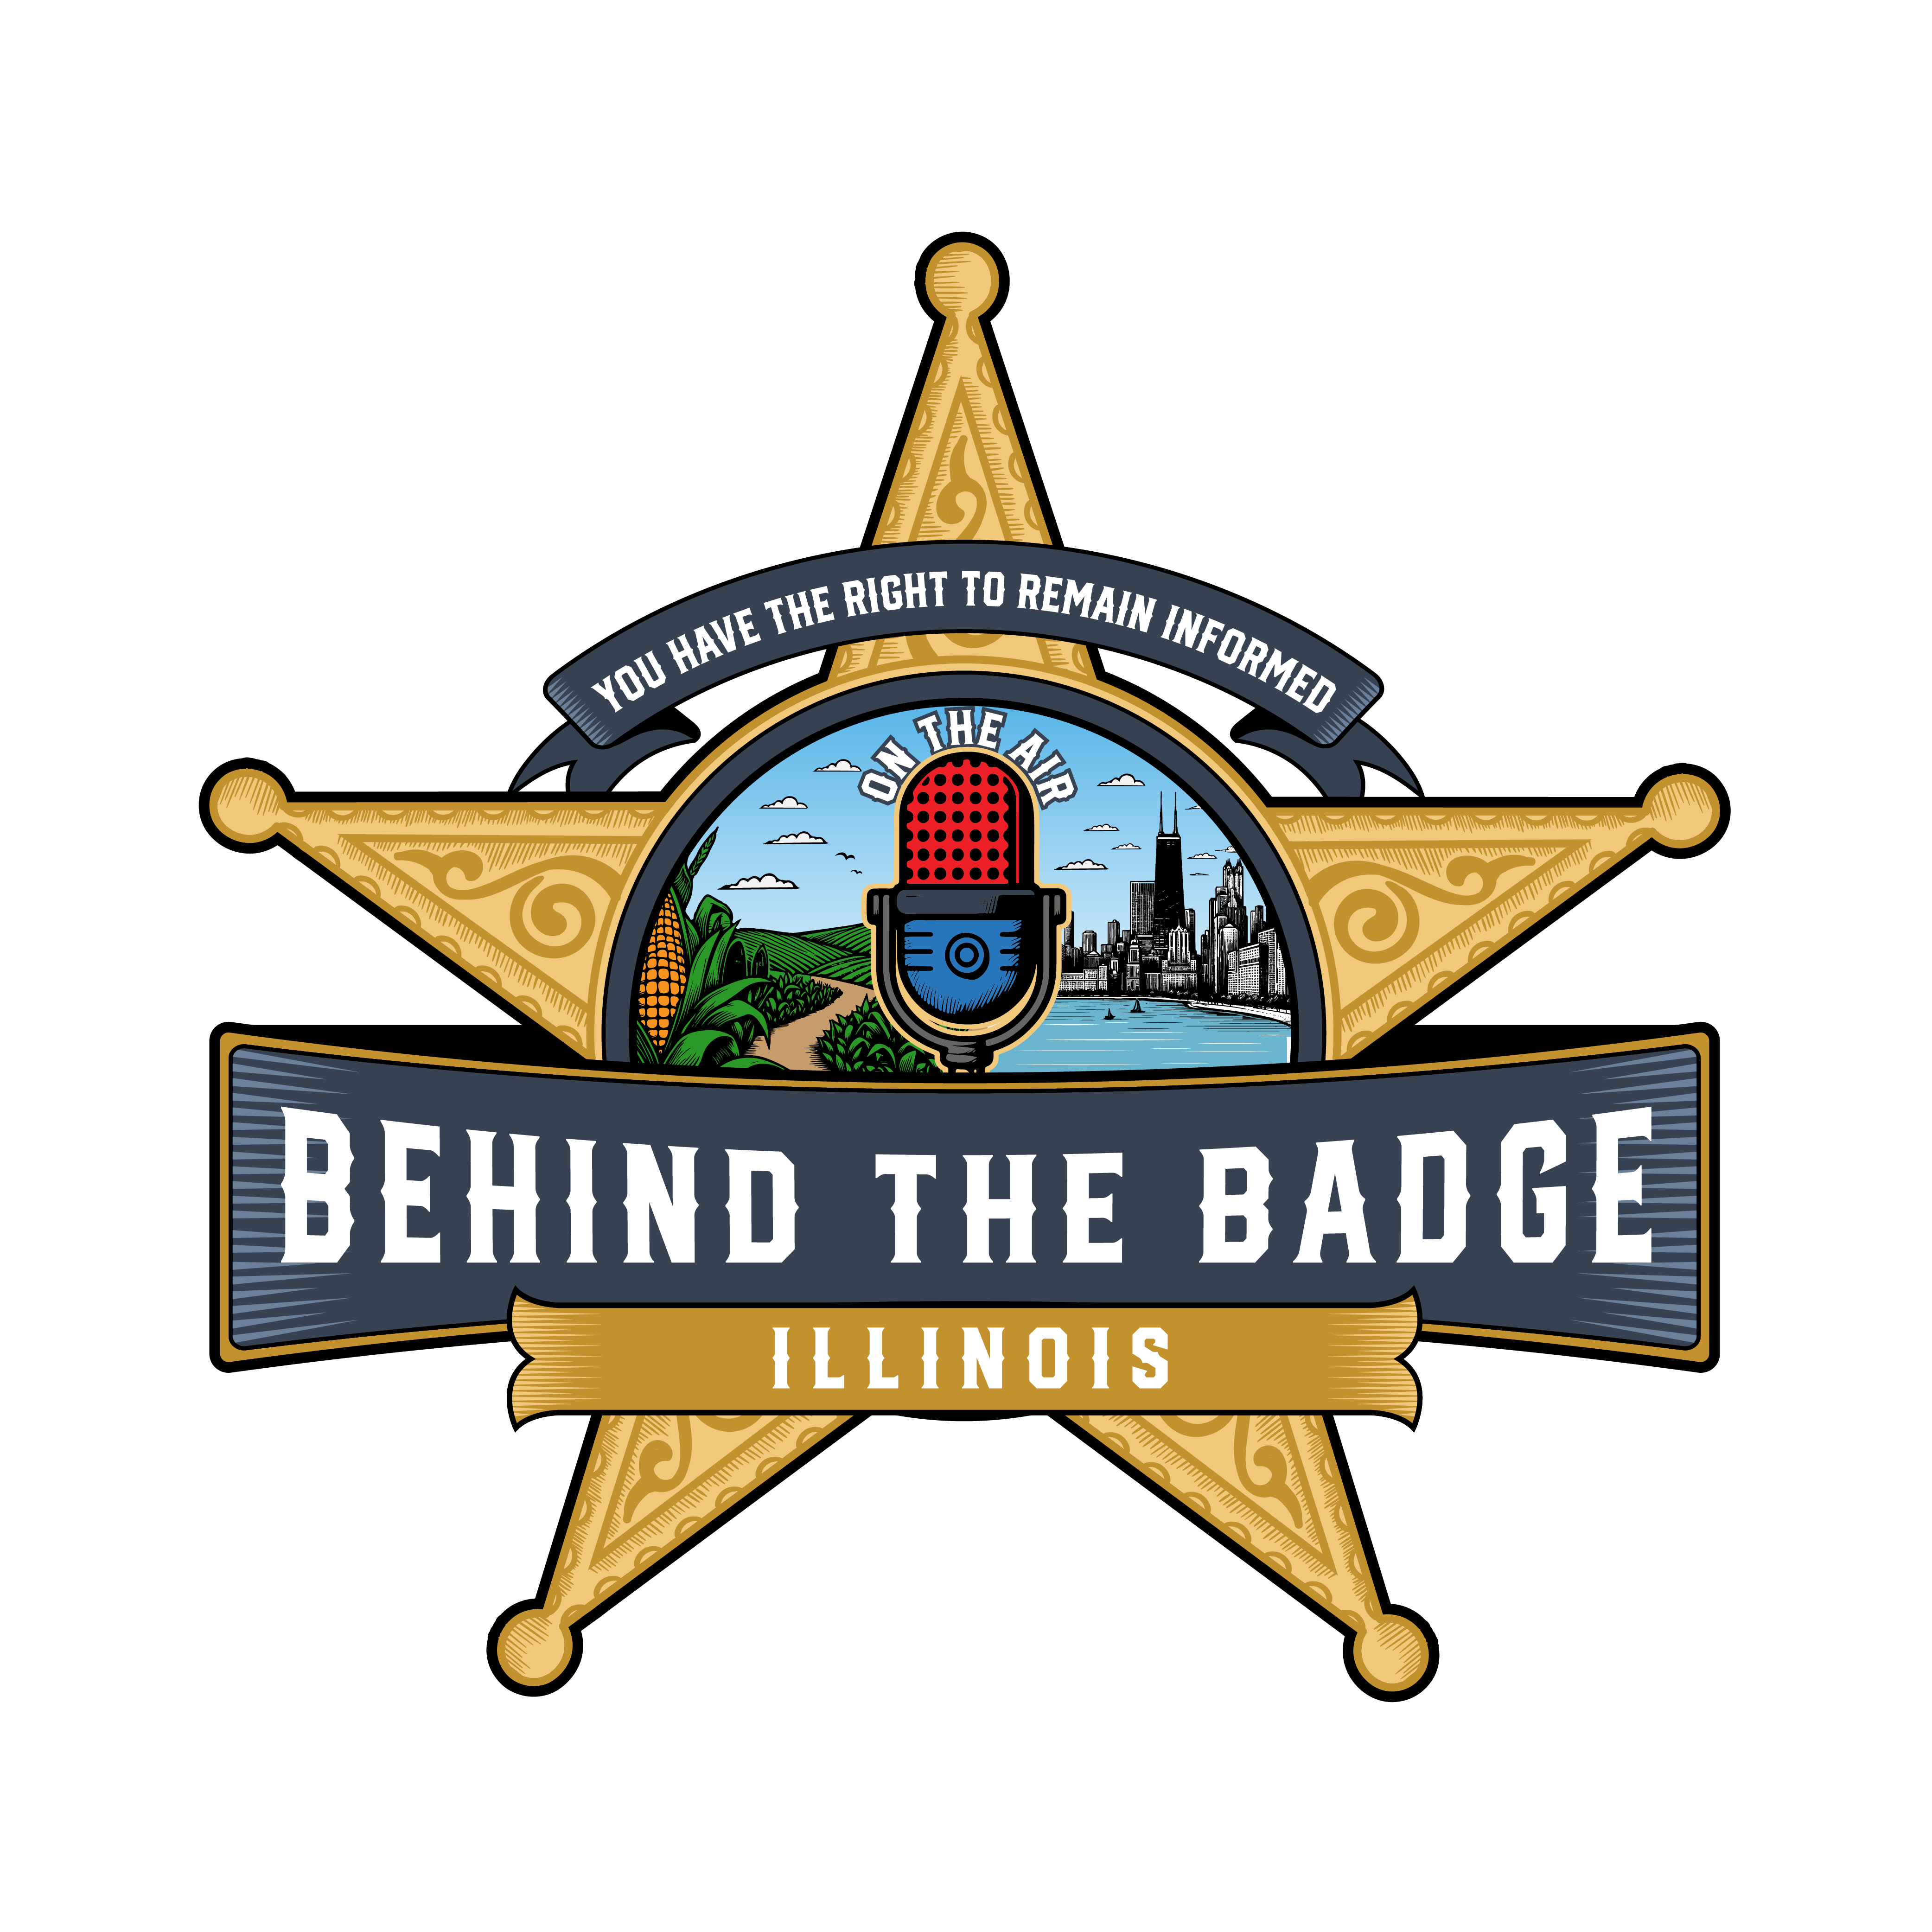 Behind the Badge Illinois